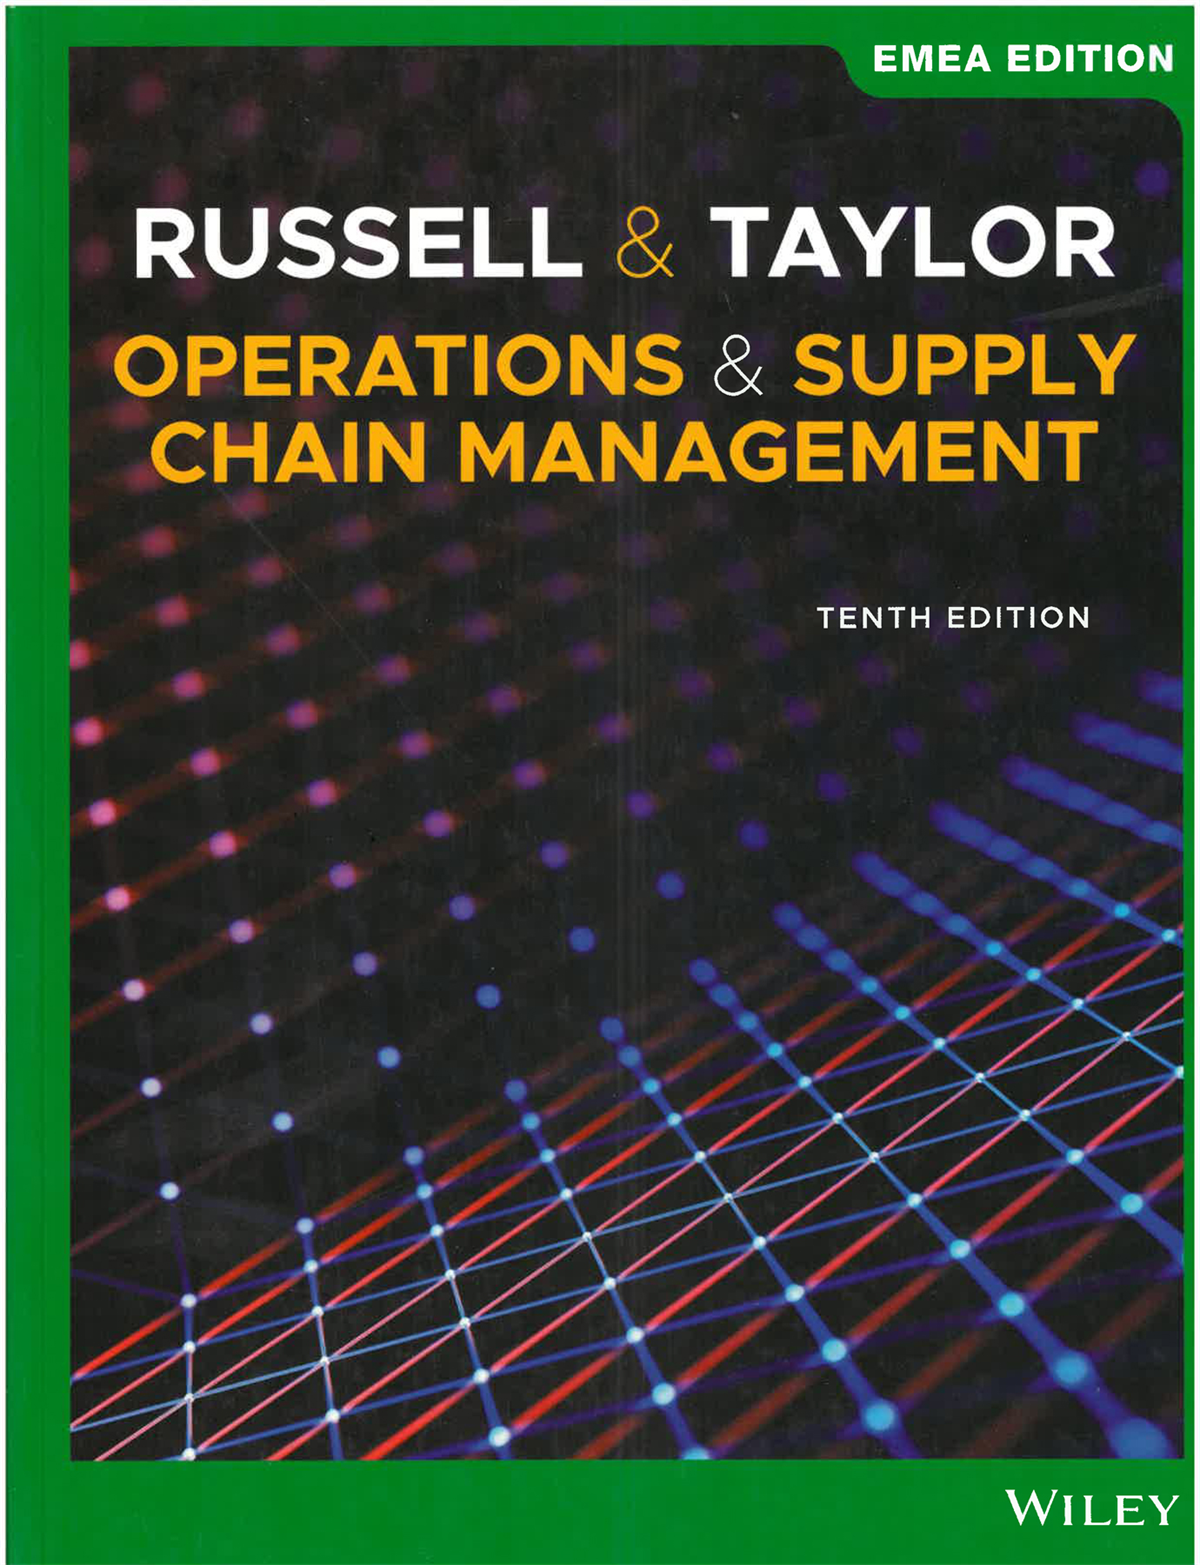 (KOD) Operations and Supply Chain Management, 10th Edition, EMEA Edition (Kod içinde e-kitap erişimi de mevcuttur.)